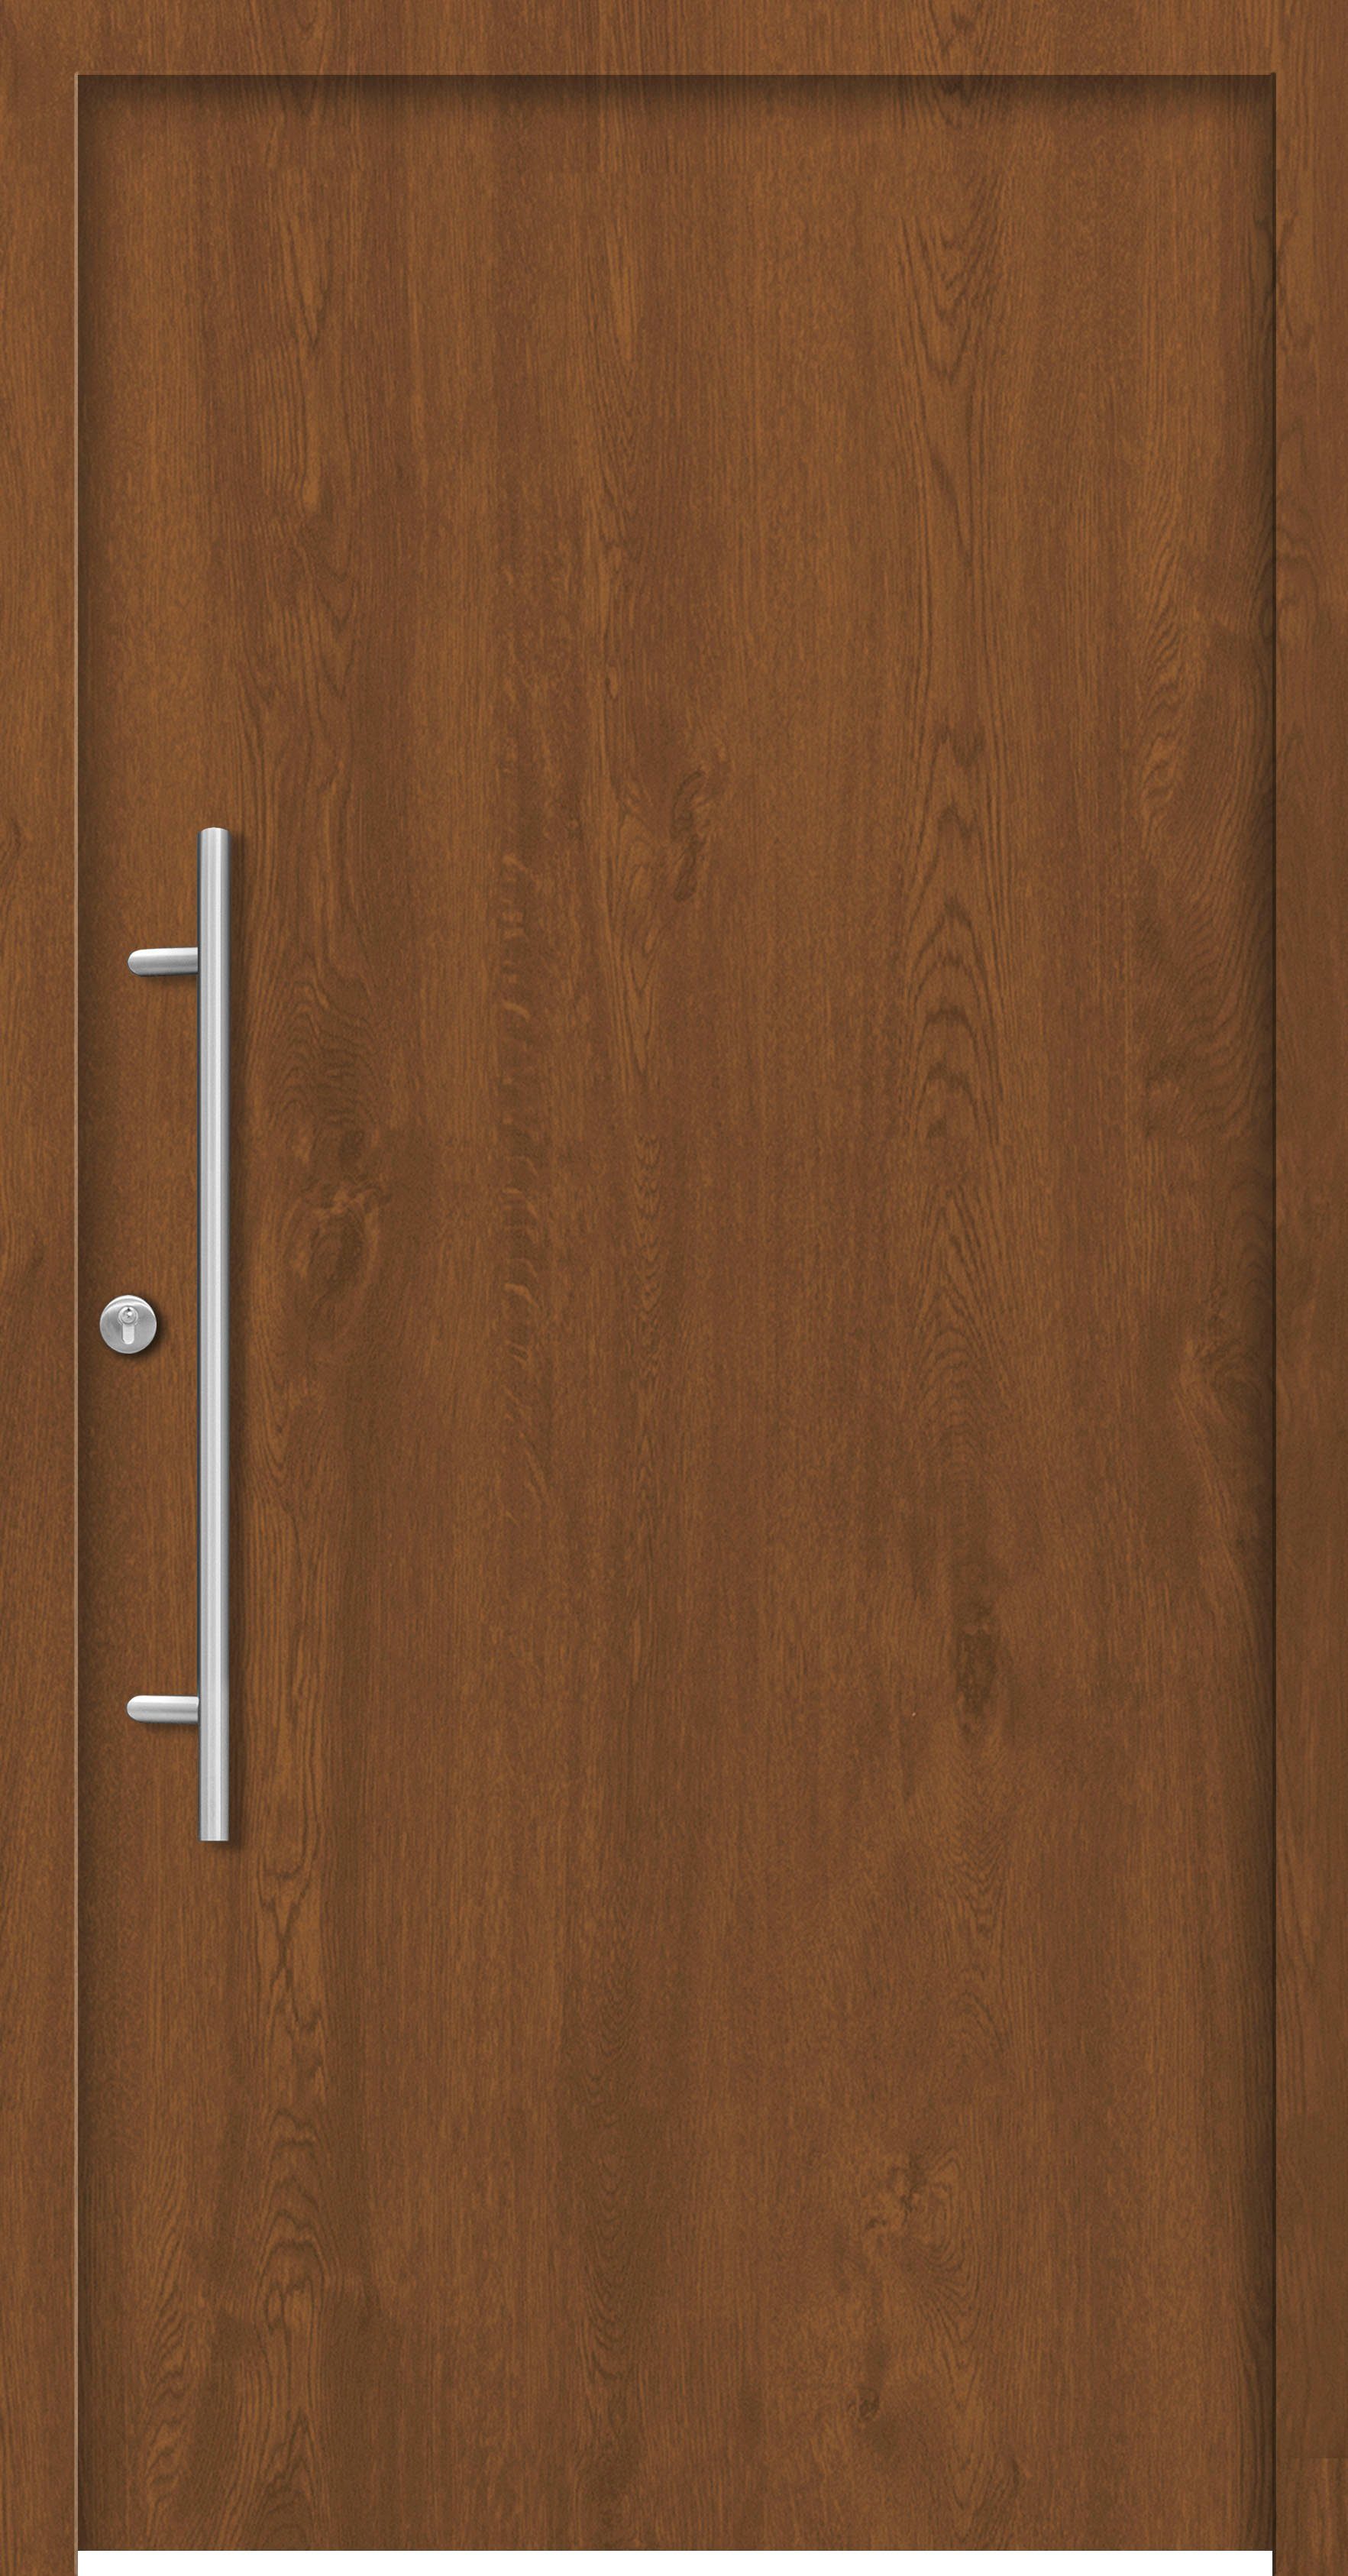 SplenDoor Haustür PATRAS Prime (Set), sehr gut wärmegedämmt und Stabil, inklusive Türrahmen Golden Oak | Haustüren